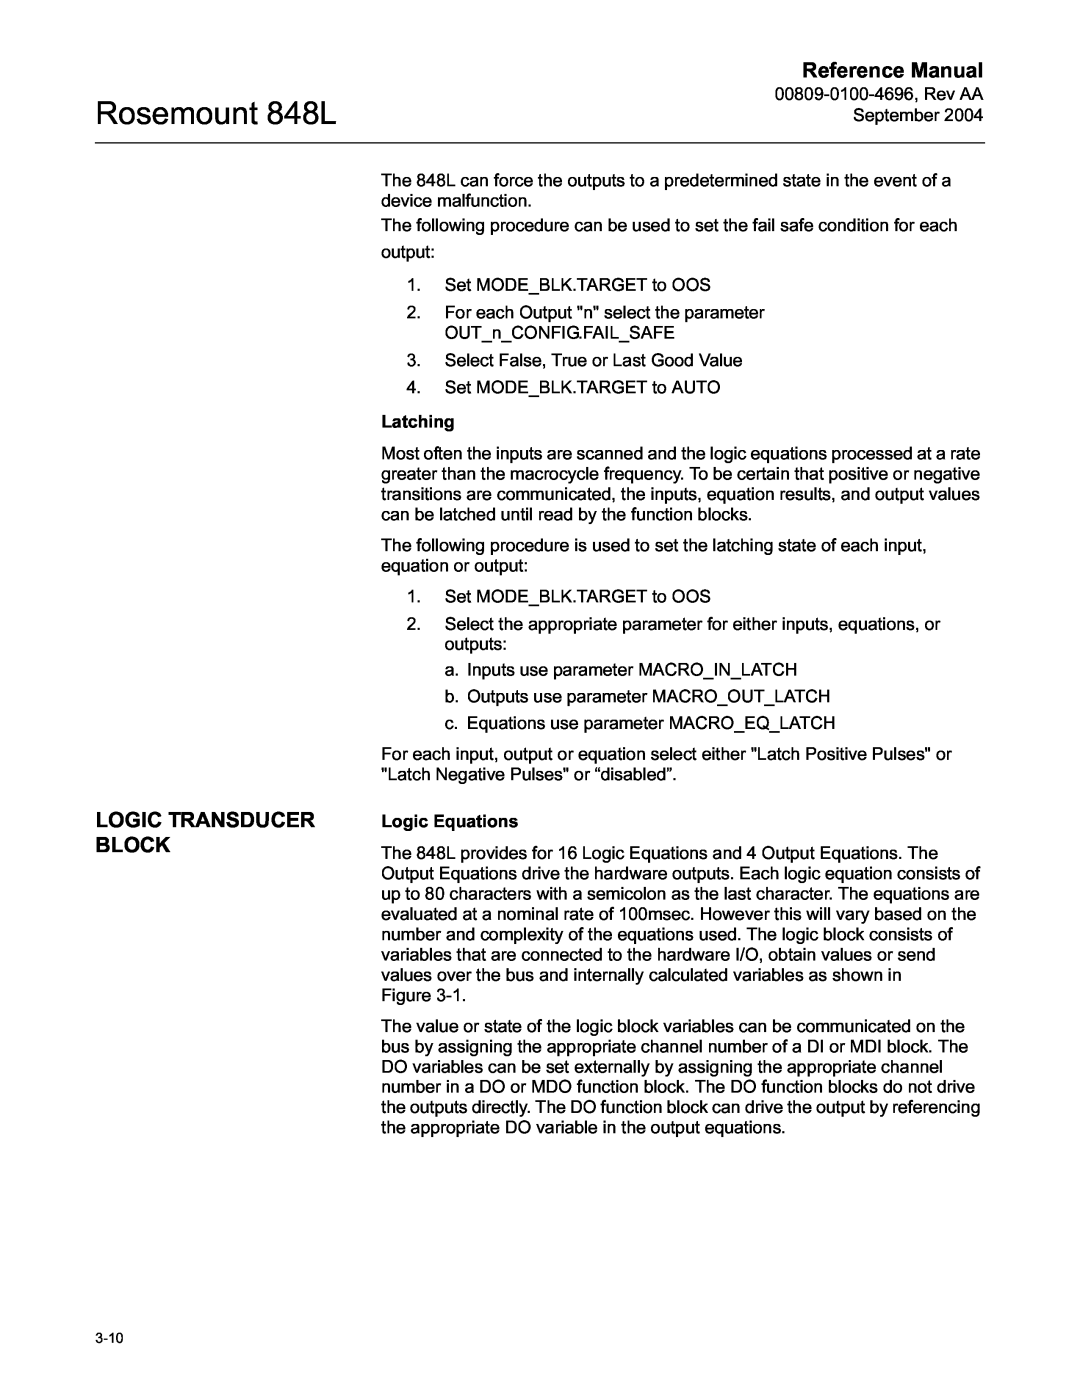 Emerson manual Logic Transducer Block, Rosemount 848L, Reference Manual 